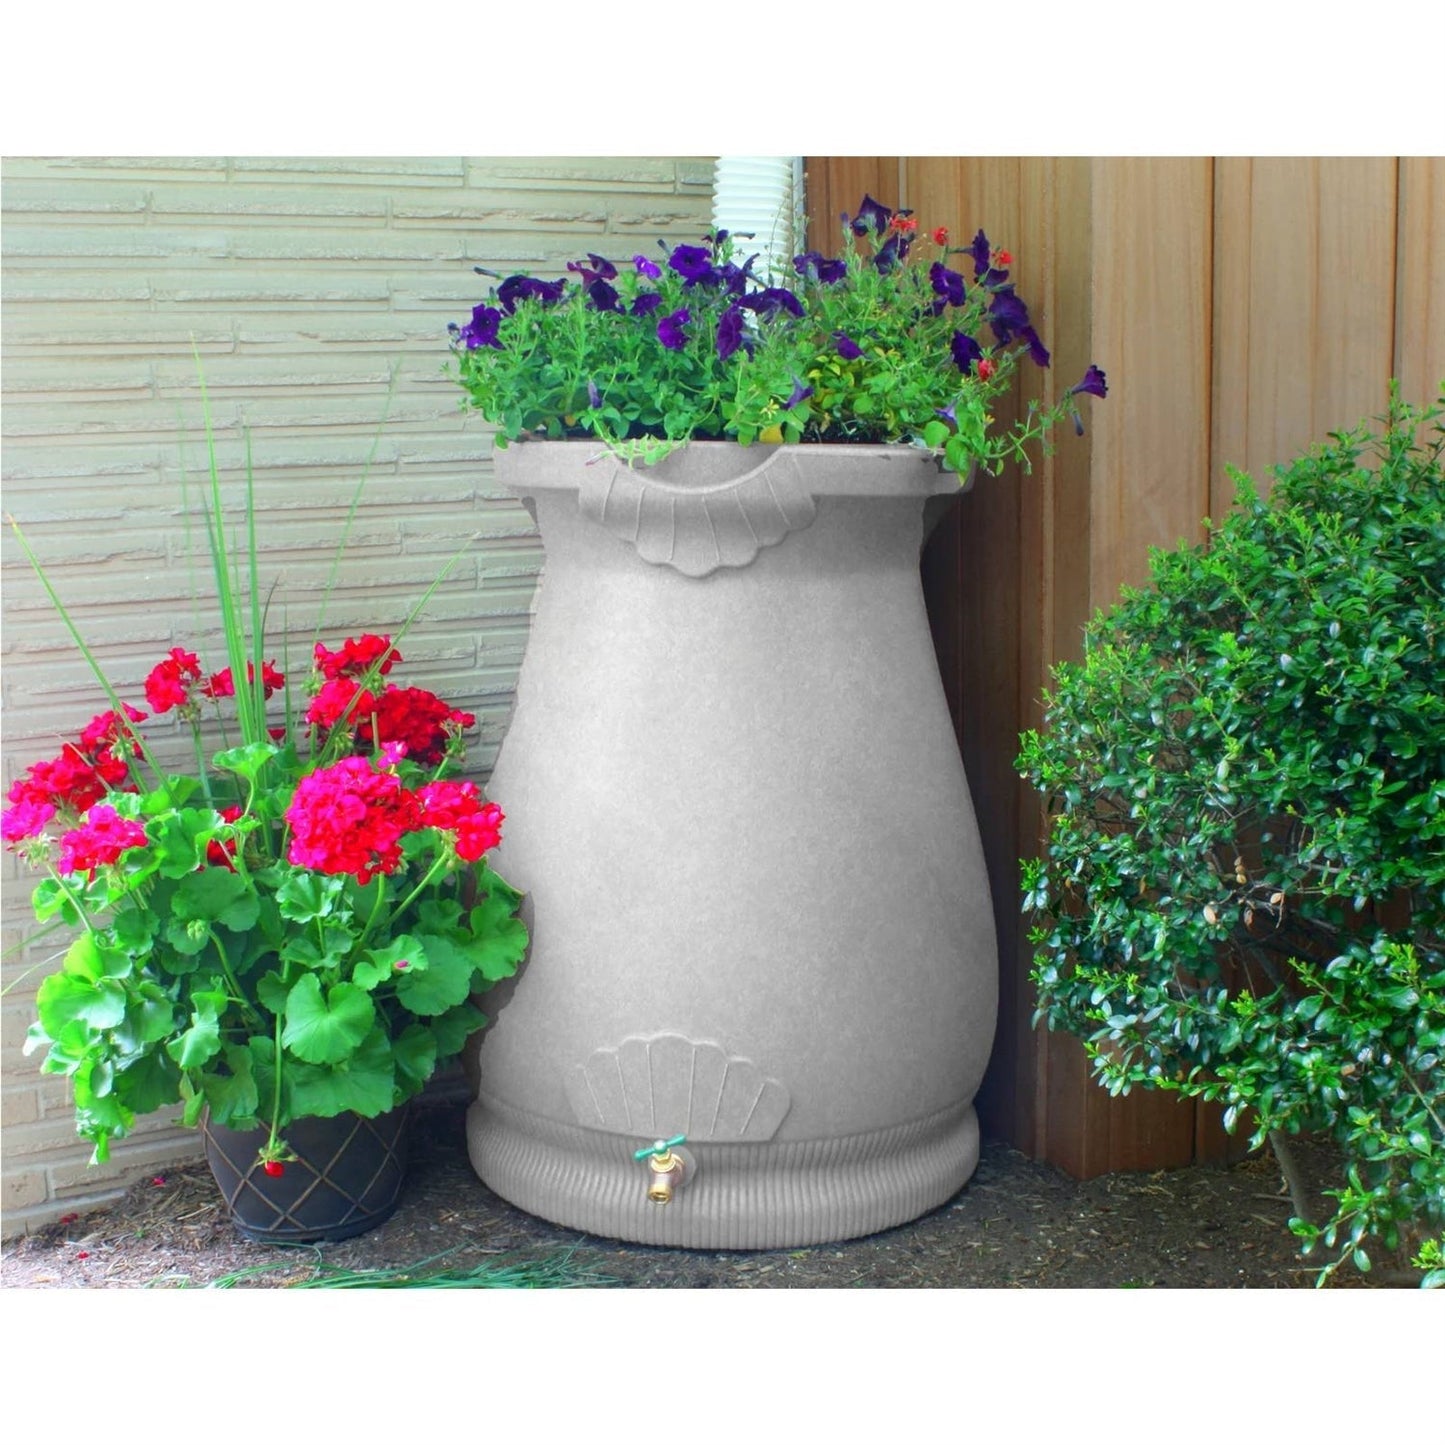 Outdoor > Gardening > Rain Barrels - Light Grey Granite 65 Gallon Plastic Urn Rain Barrel With Planter Top